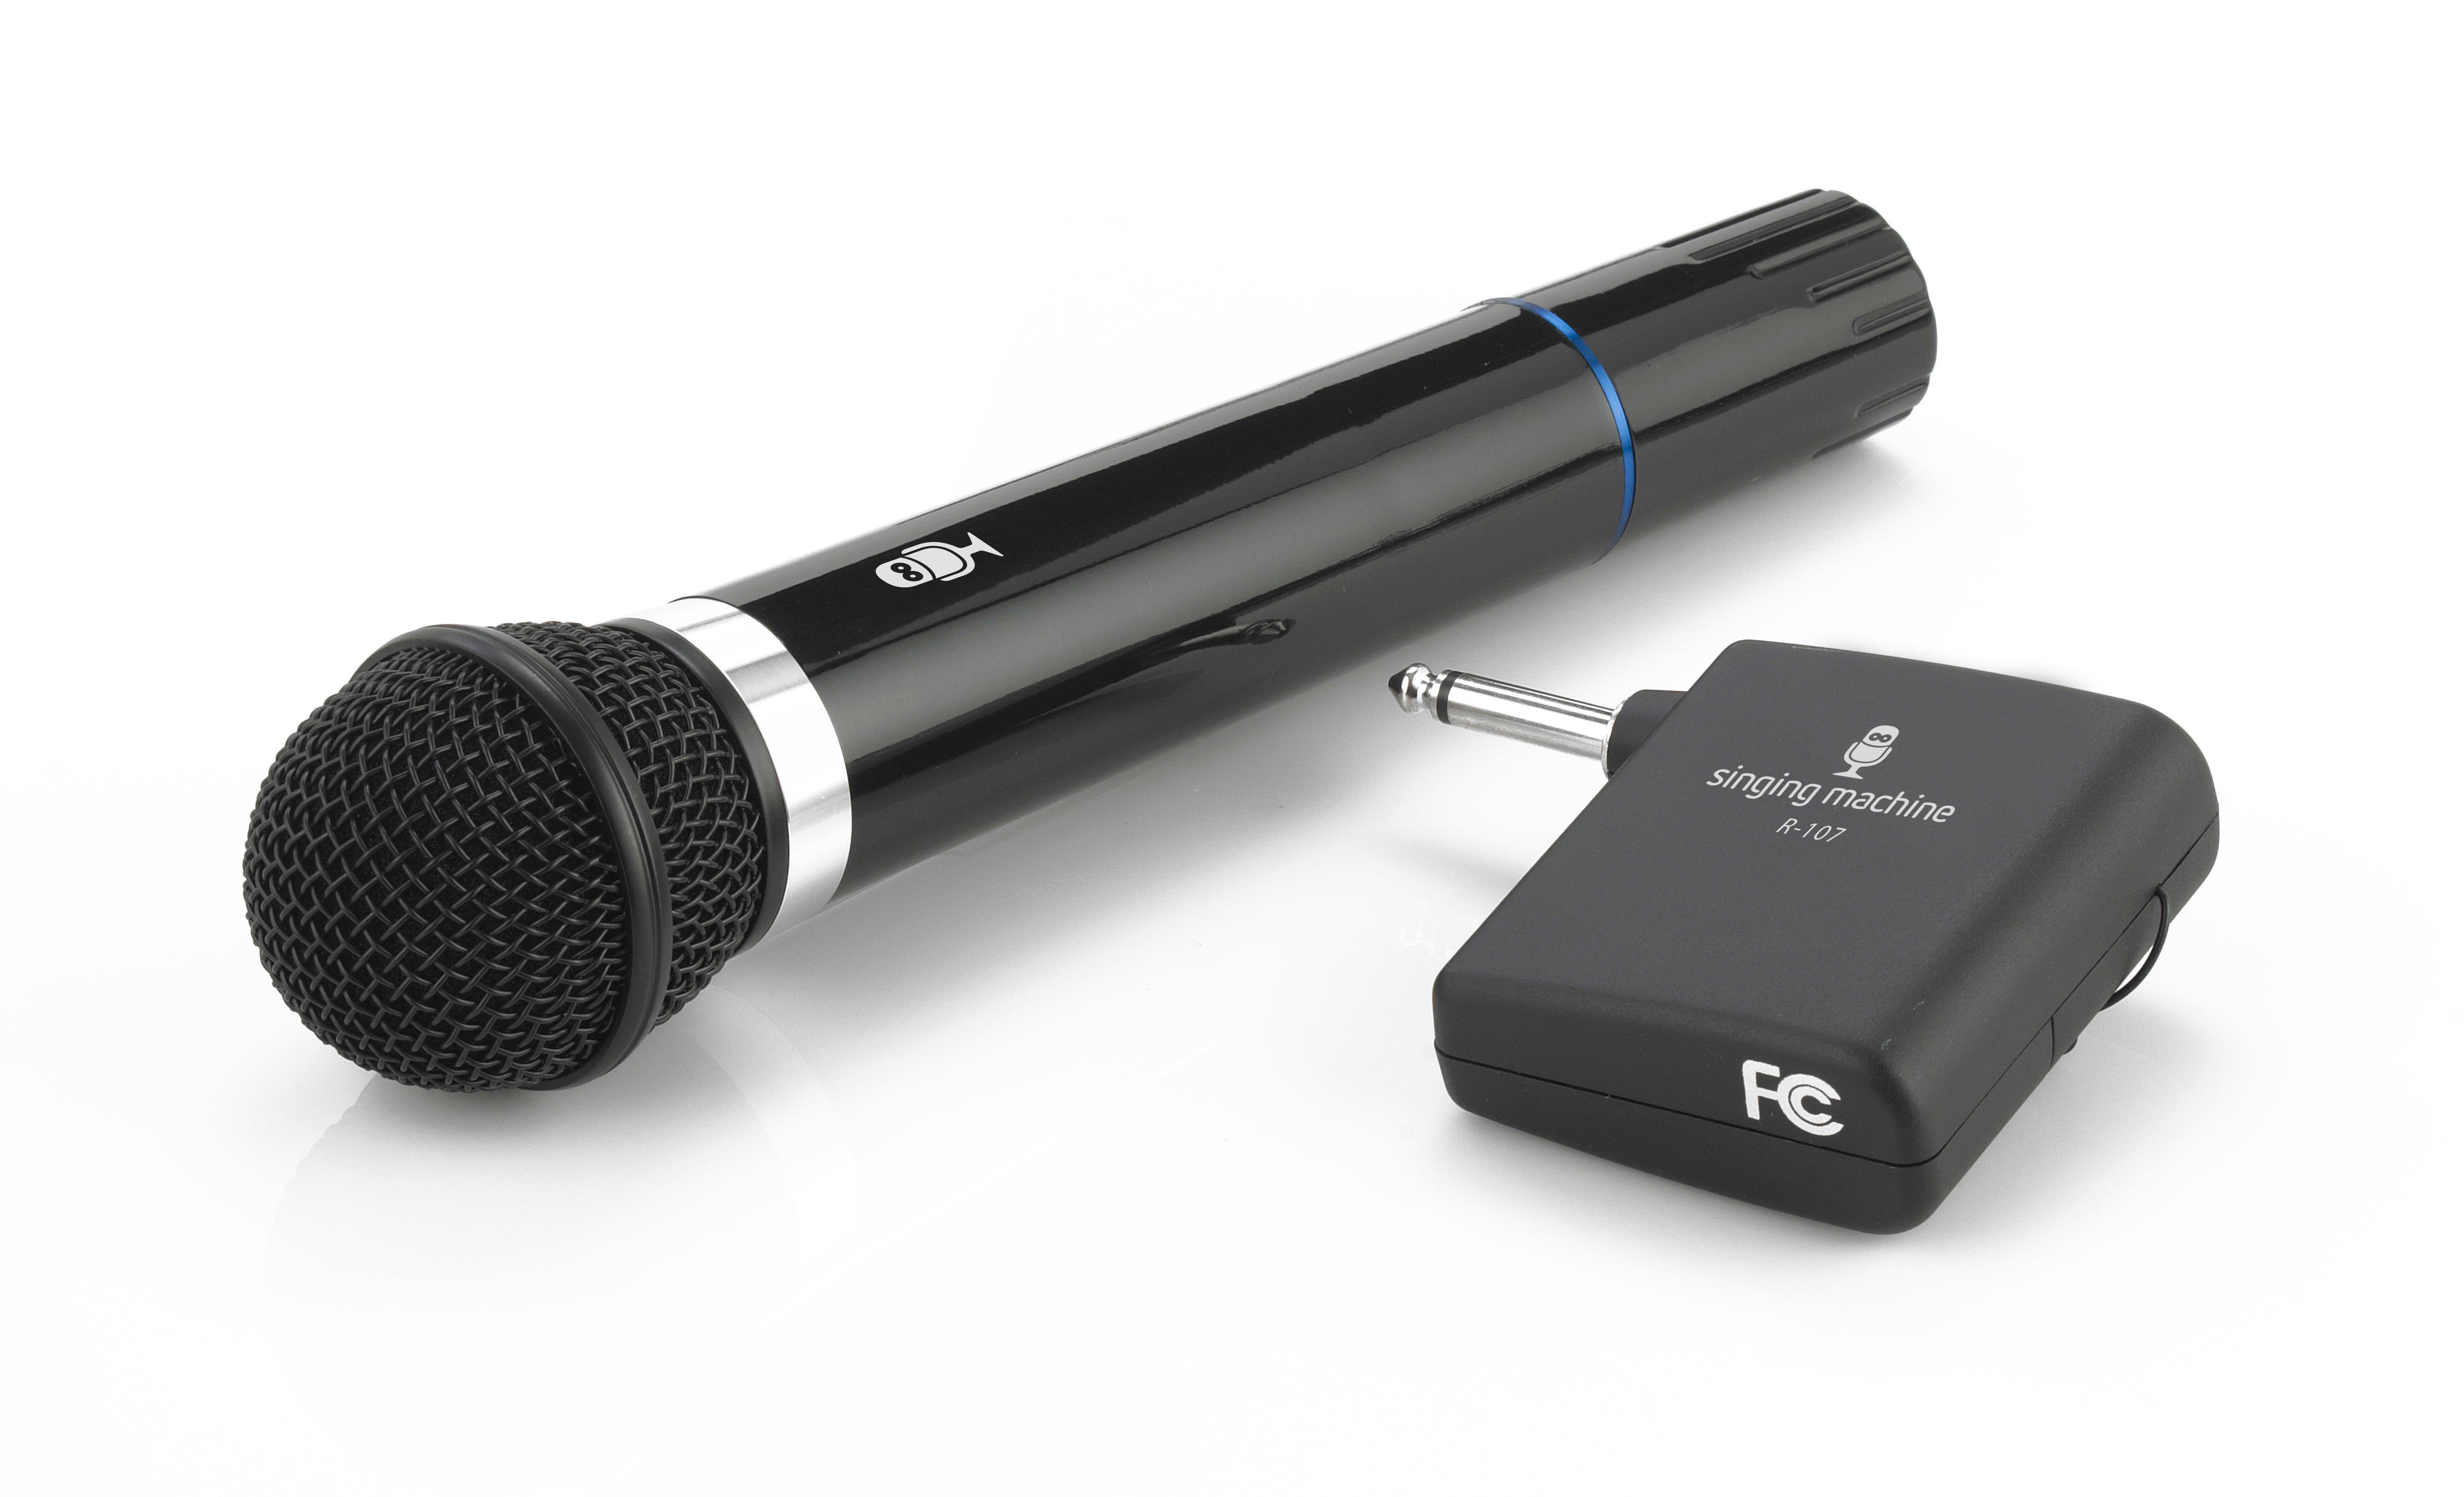 The Singing Machine Wireless Microphone Black